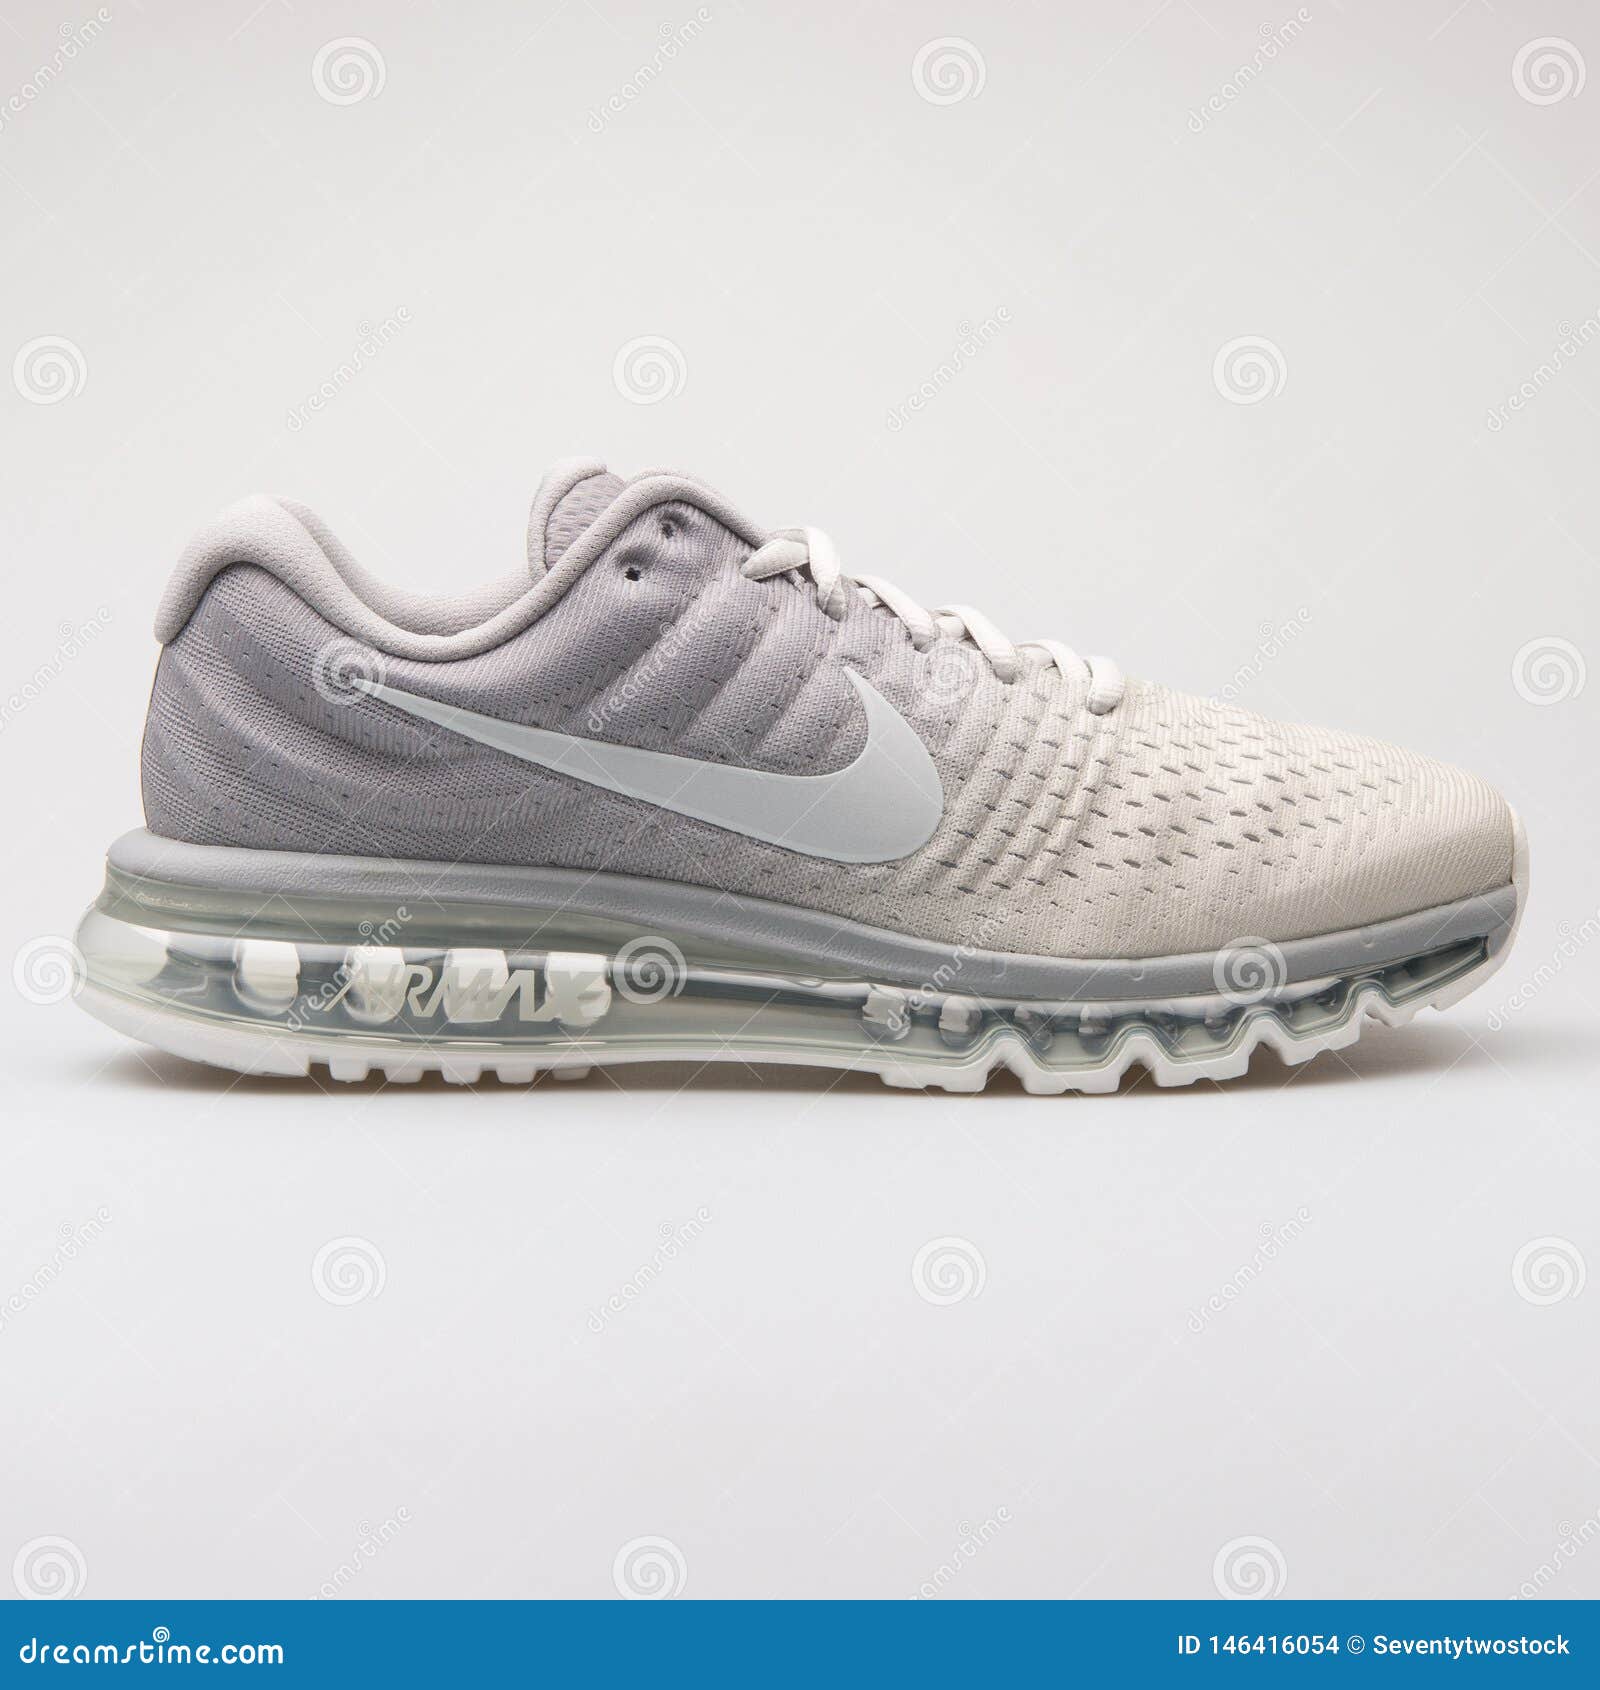 Nike Air Max 2017 White Sneaker Editorial Stock Image of item, nike: 146416054